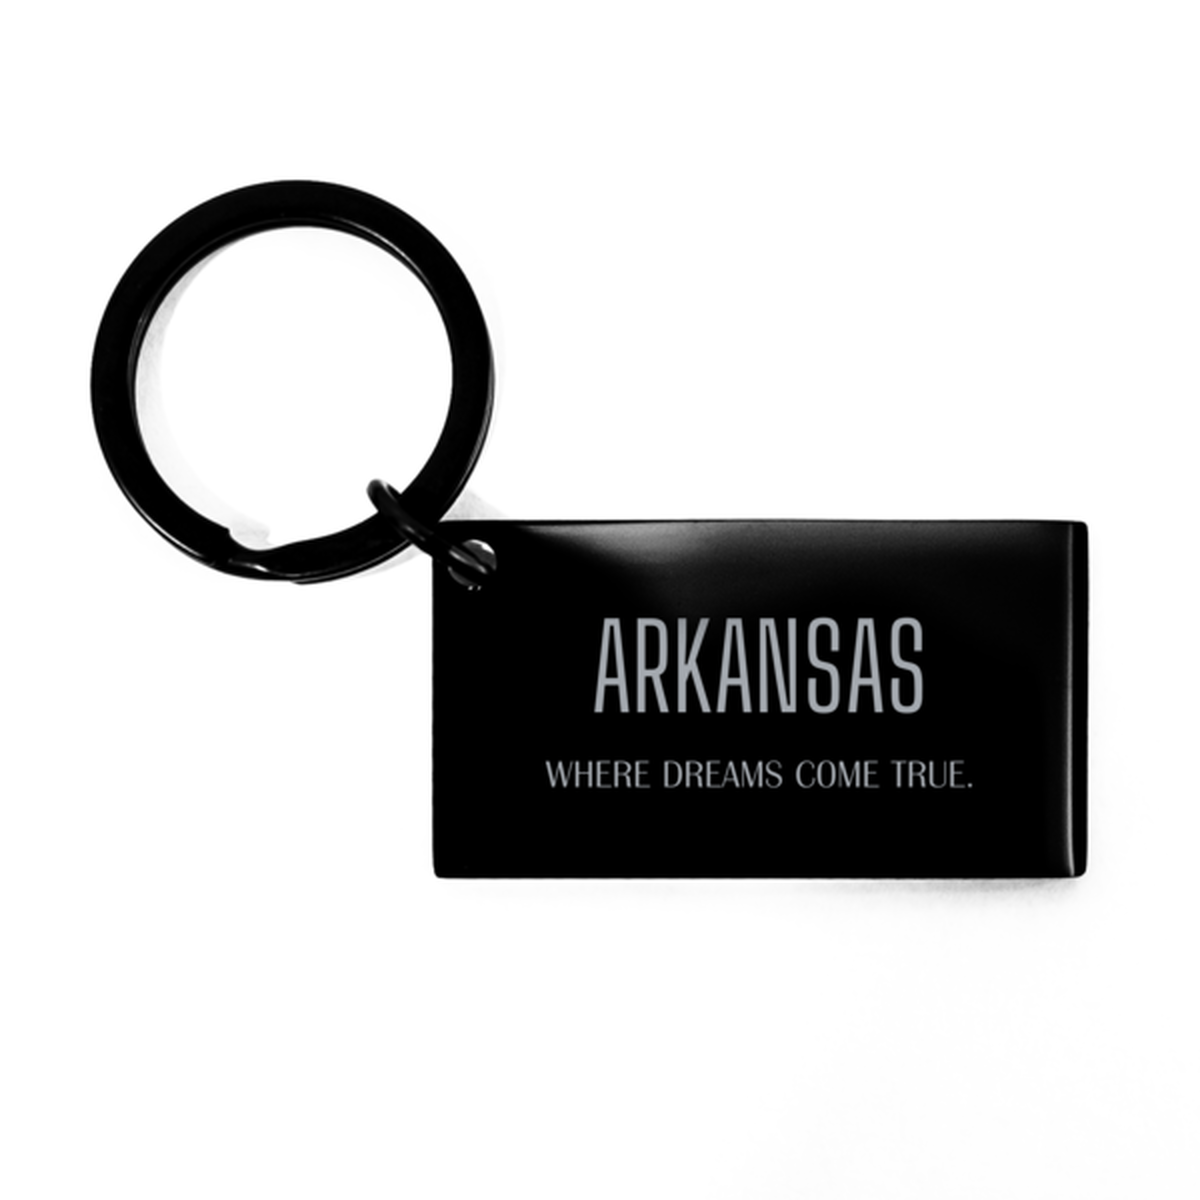 Love Arkansas State Keychain, Arkansas Where dreams come true, Birthday Inspirational Gifts For Arkansas Men, Women, Friends